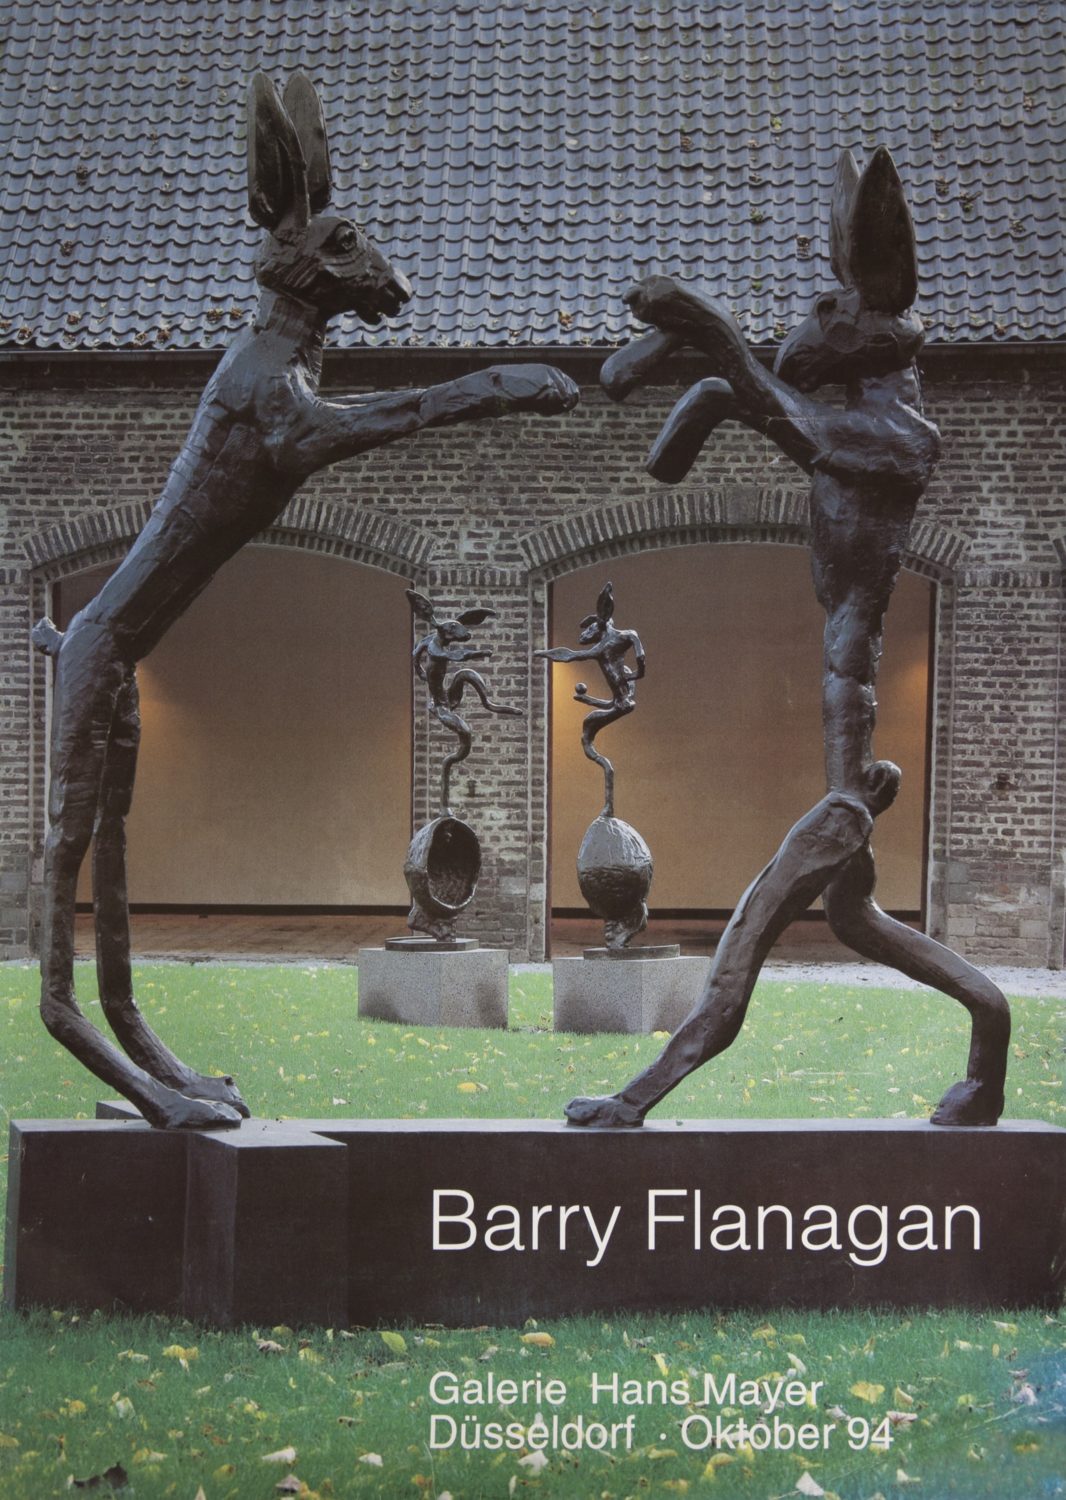 ‘Barry Flanagan’, Galerie Hans Mayer, Dusseldorf, Germany (1994)